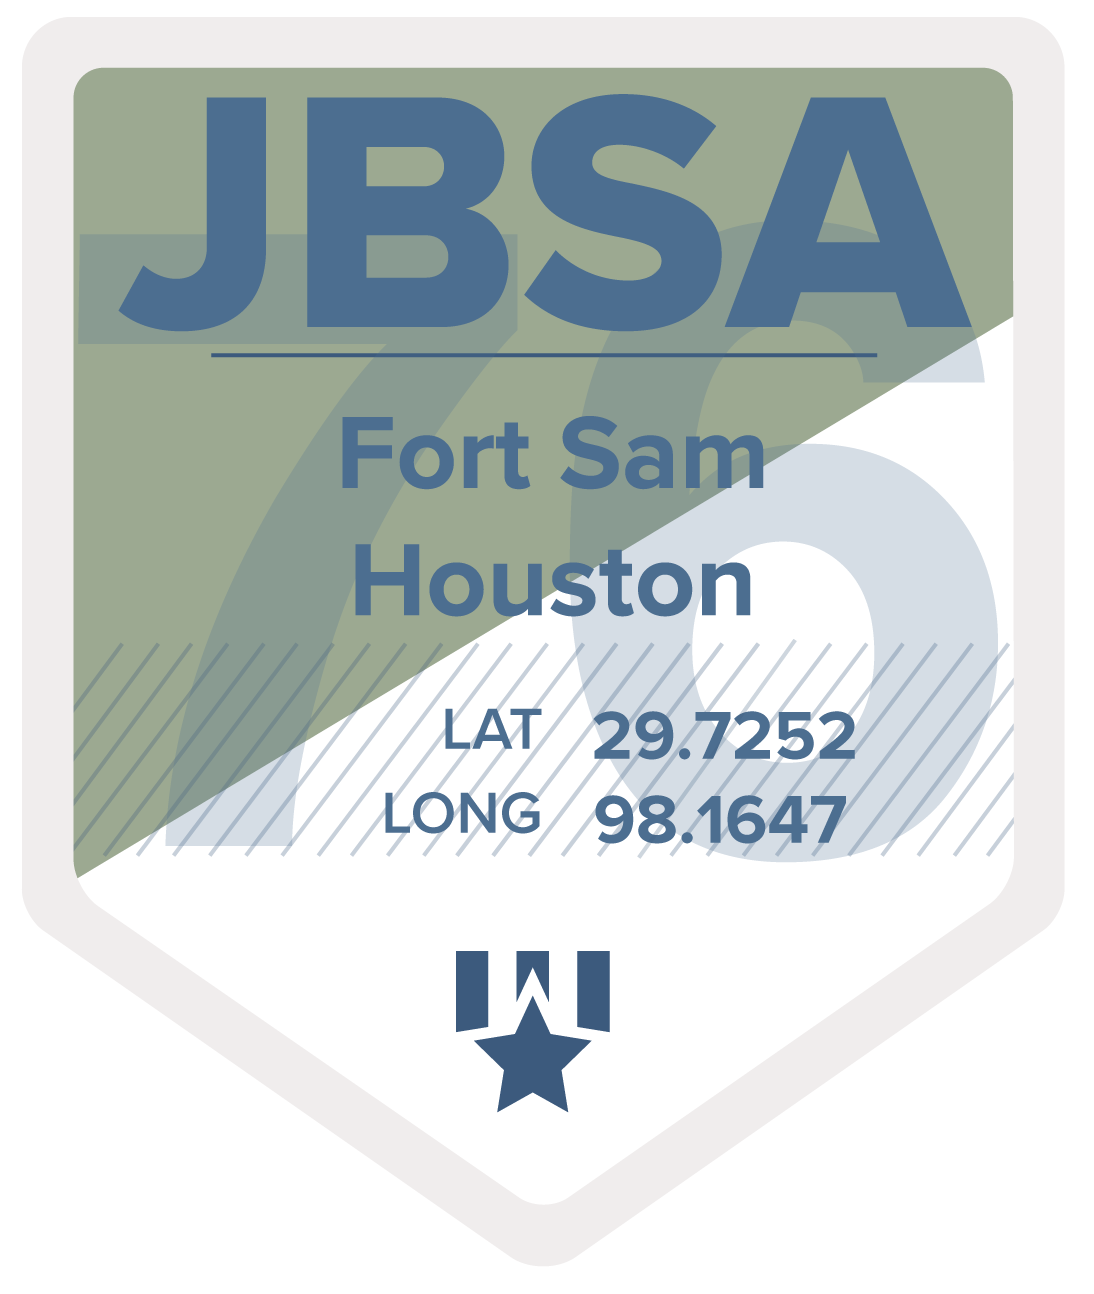 Joint Base San Antonio Fort Sam Houston